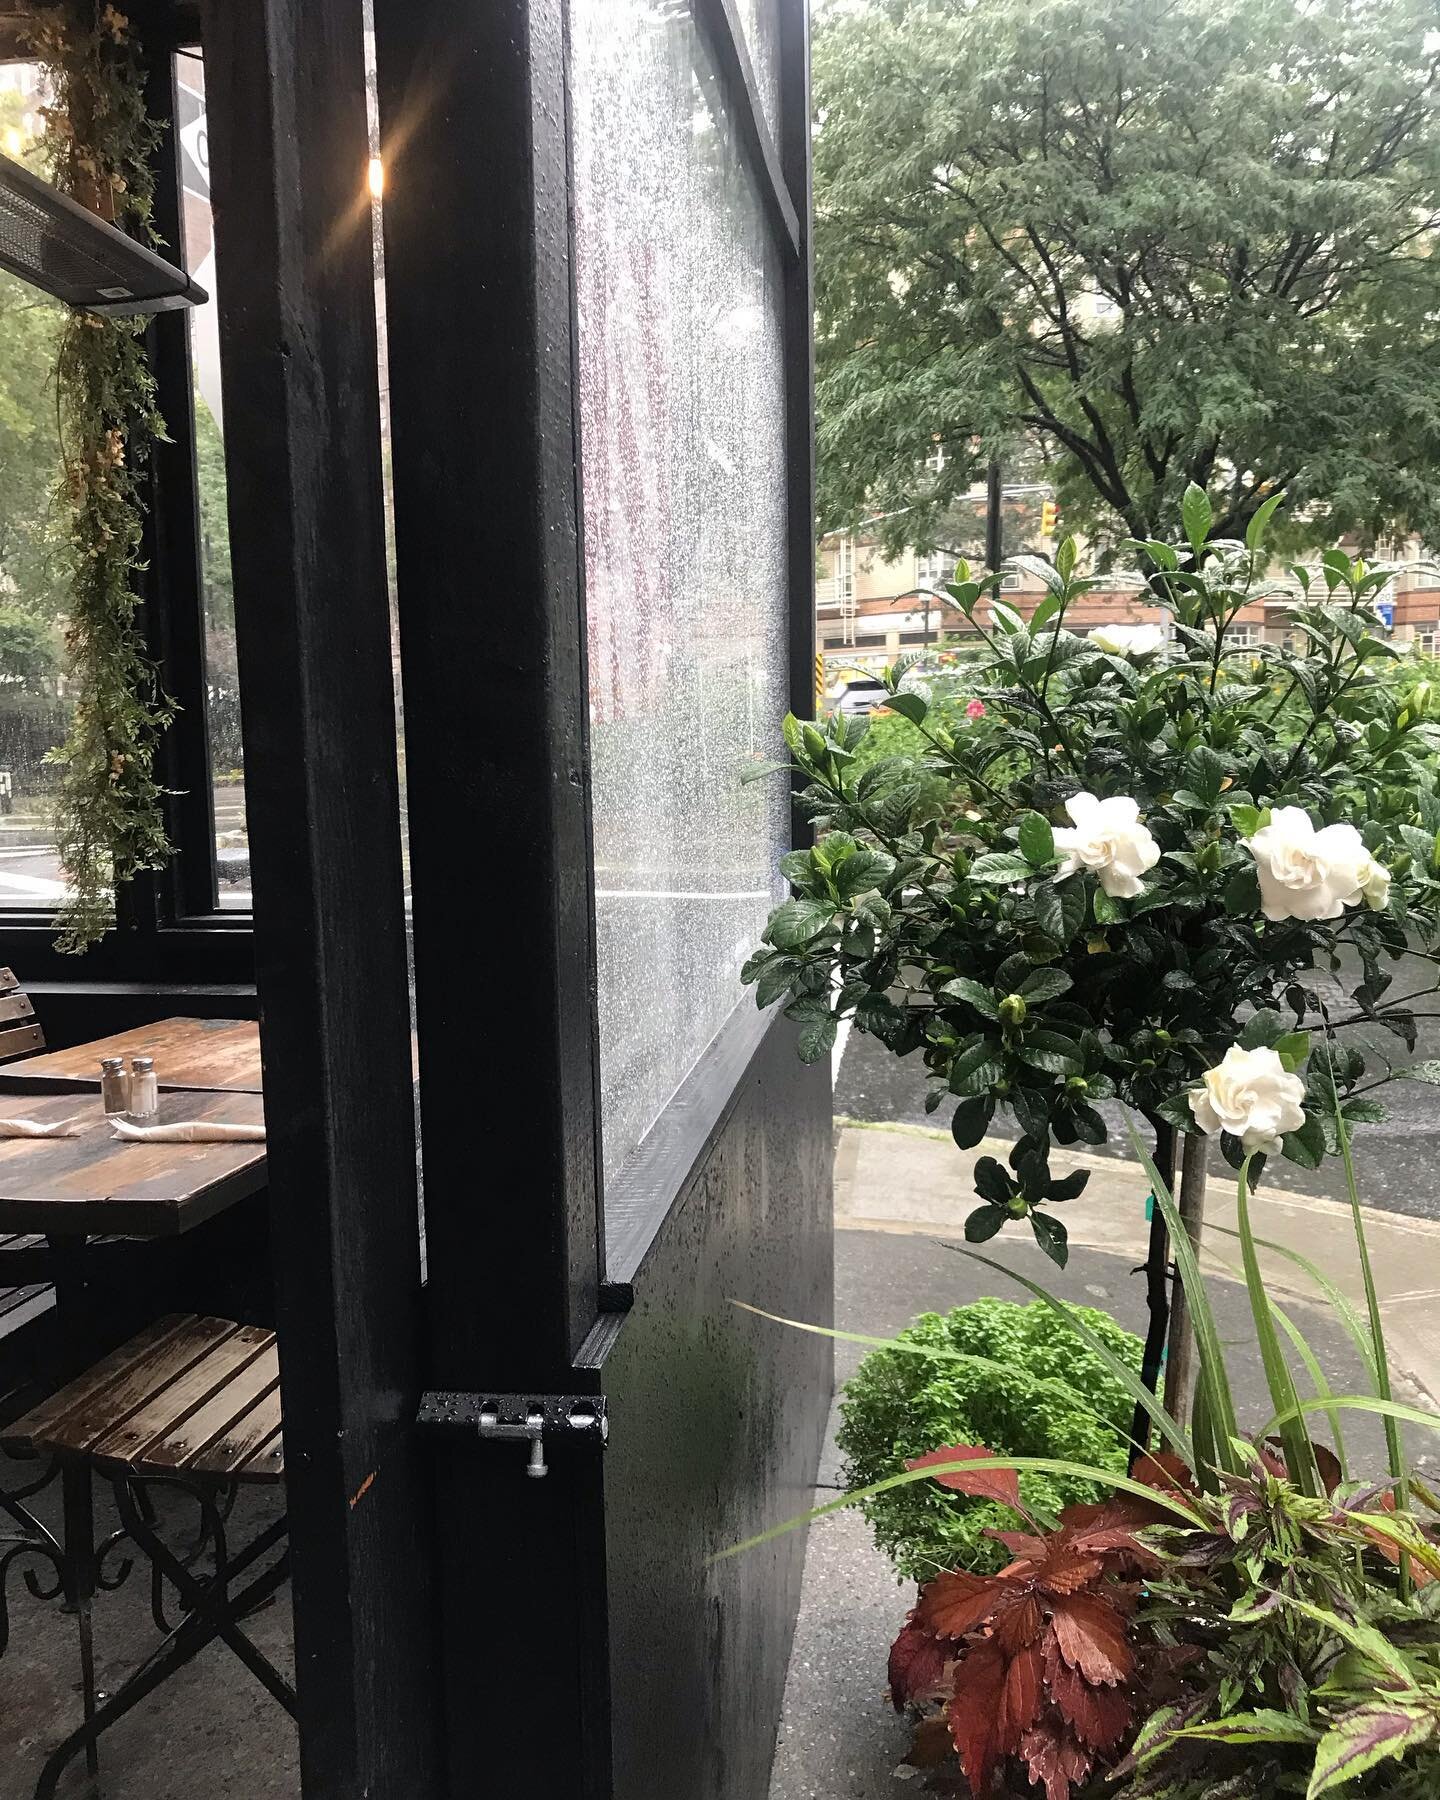 Gardenia loves the rain 🌧 
Happy Flower Friday!!!
.
.
#gardenia #rain #rainyday #flowers #beautiful #friday #scent #aroma #fragrance #freshblooms #plantlovers #flowerloves  #cloudyday #water #clouds #love #happy #nyc #manhattan #westvillagenyc #i❤️n